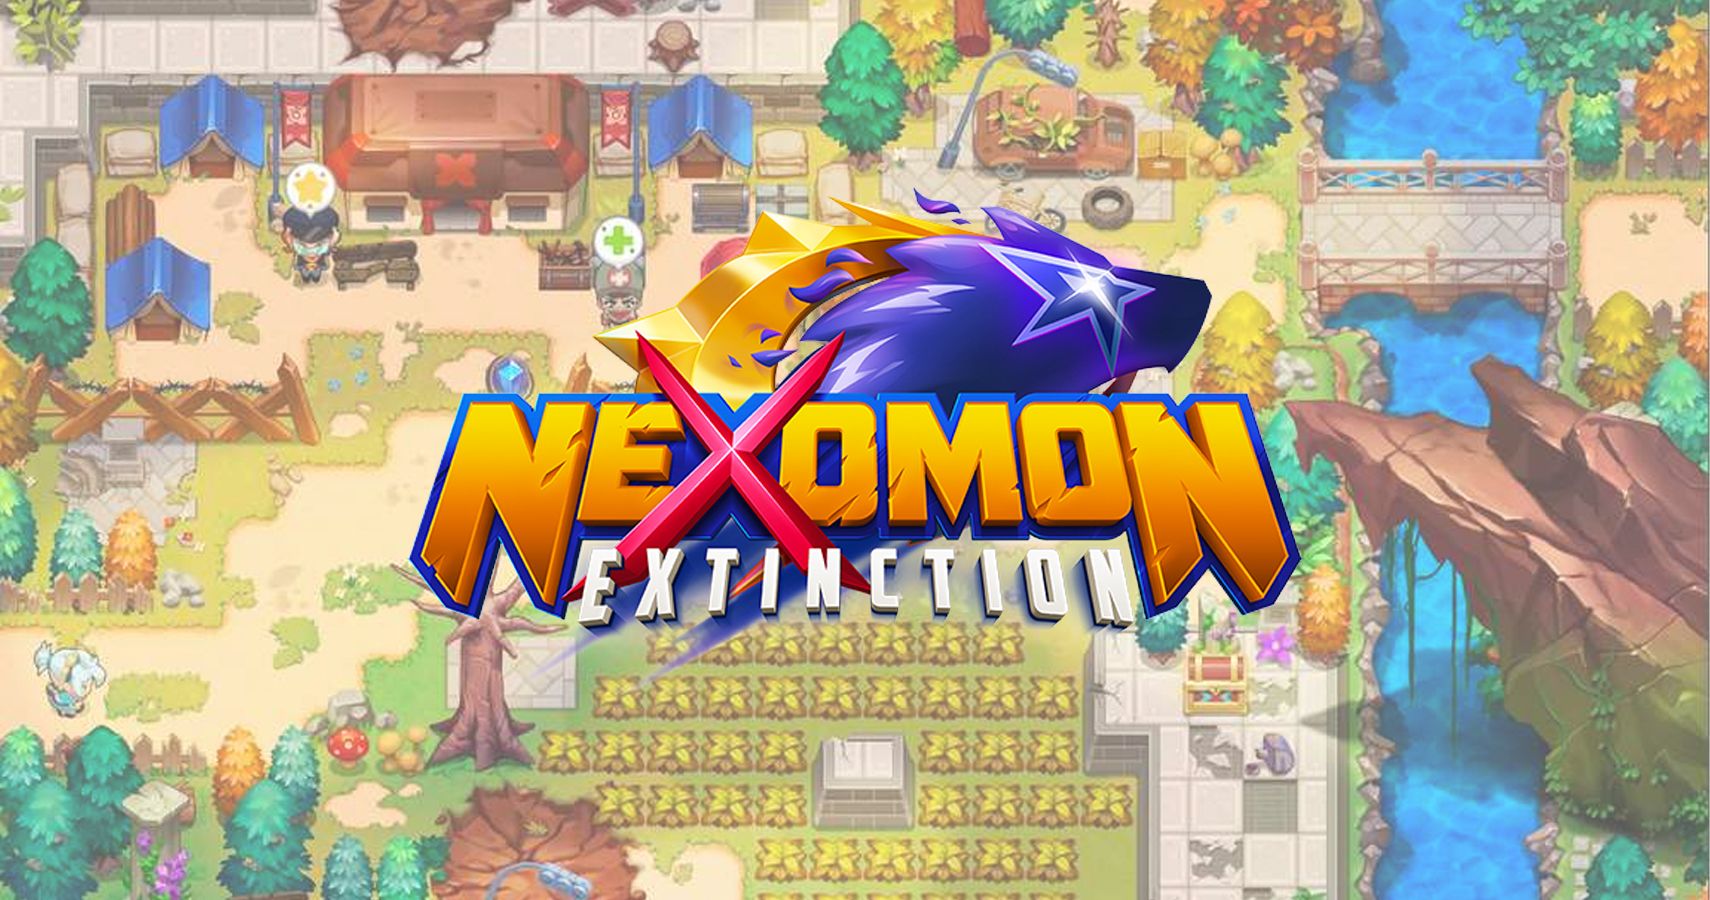 Nexomon Extinction Reveals All 9 Starting Nexomon